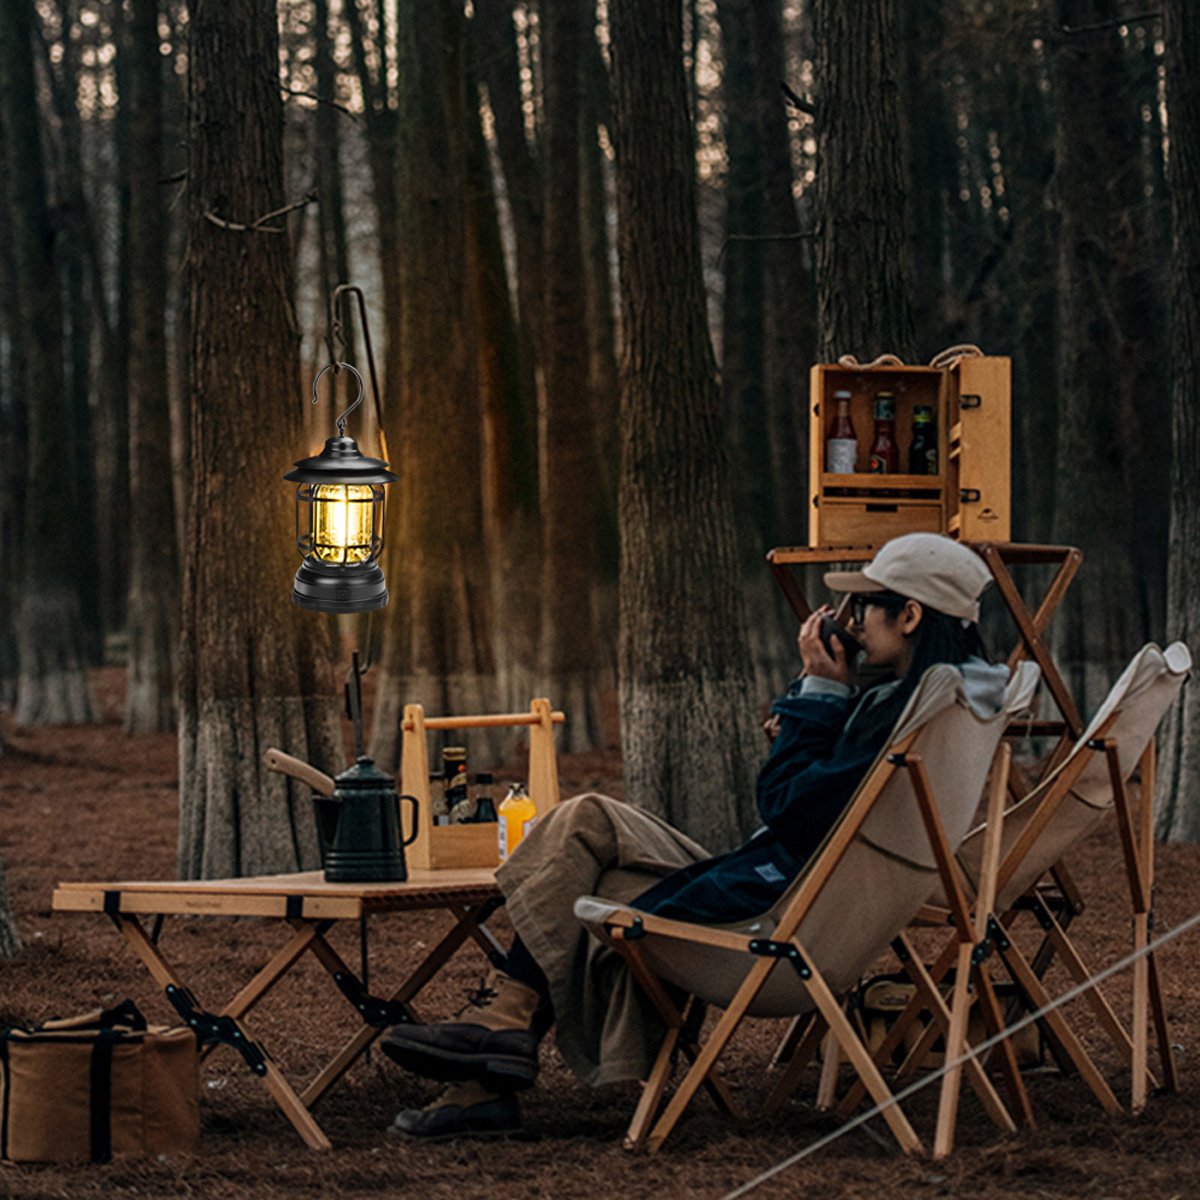 Outdoor-COB-Camping-Lamp-300LM-Retro-Light-Portable-Emergency-Lighting-Tent-Kerosene-Lantern-For-Hik-1930684-10